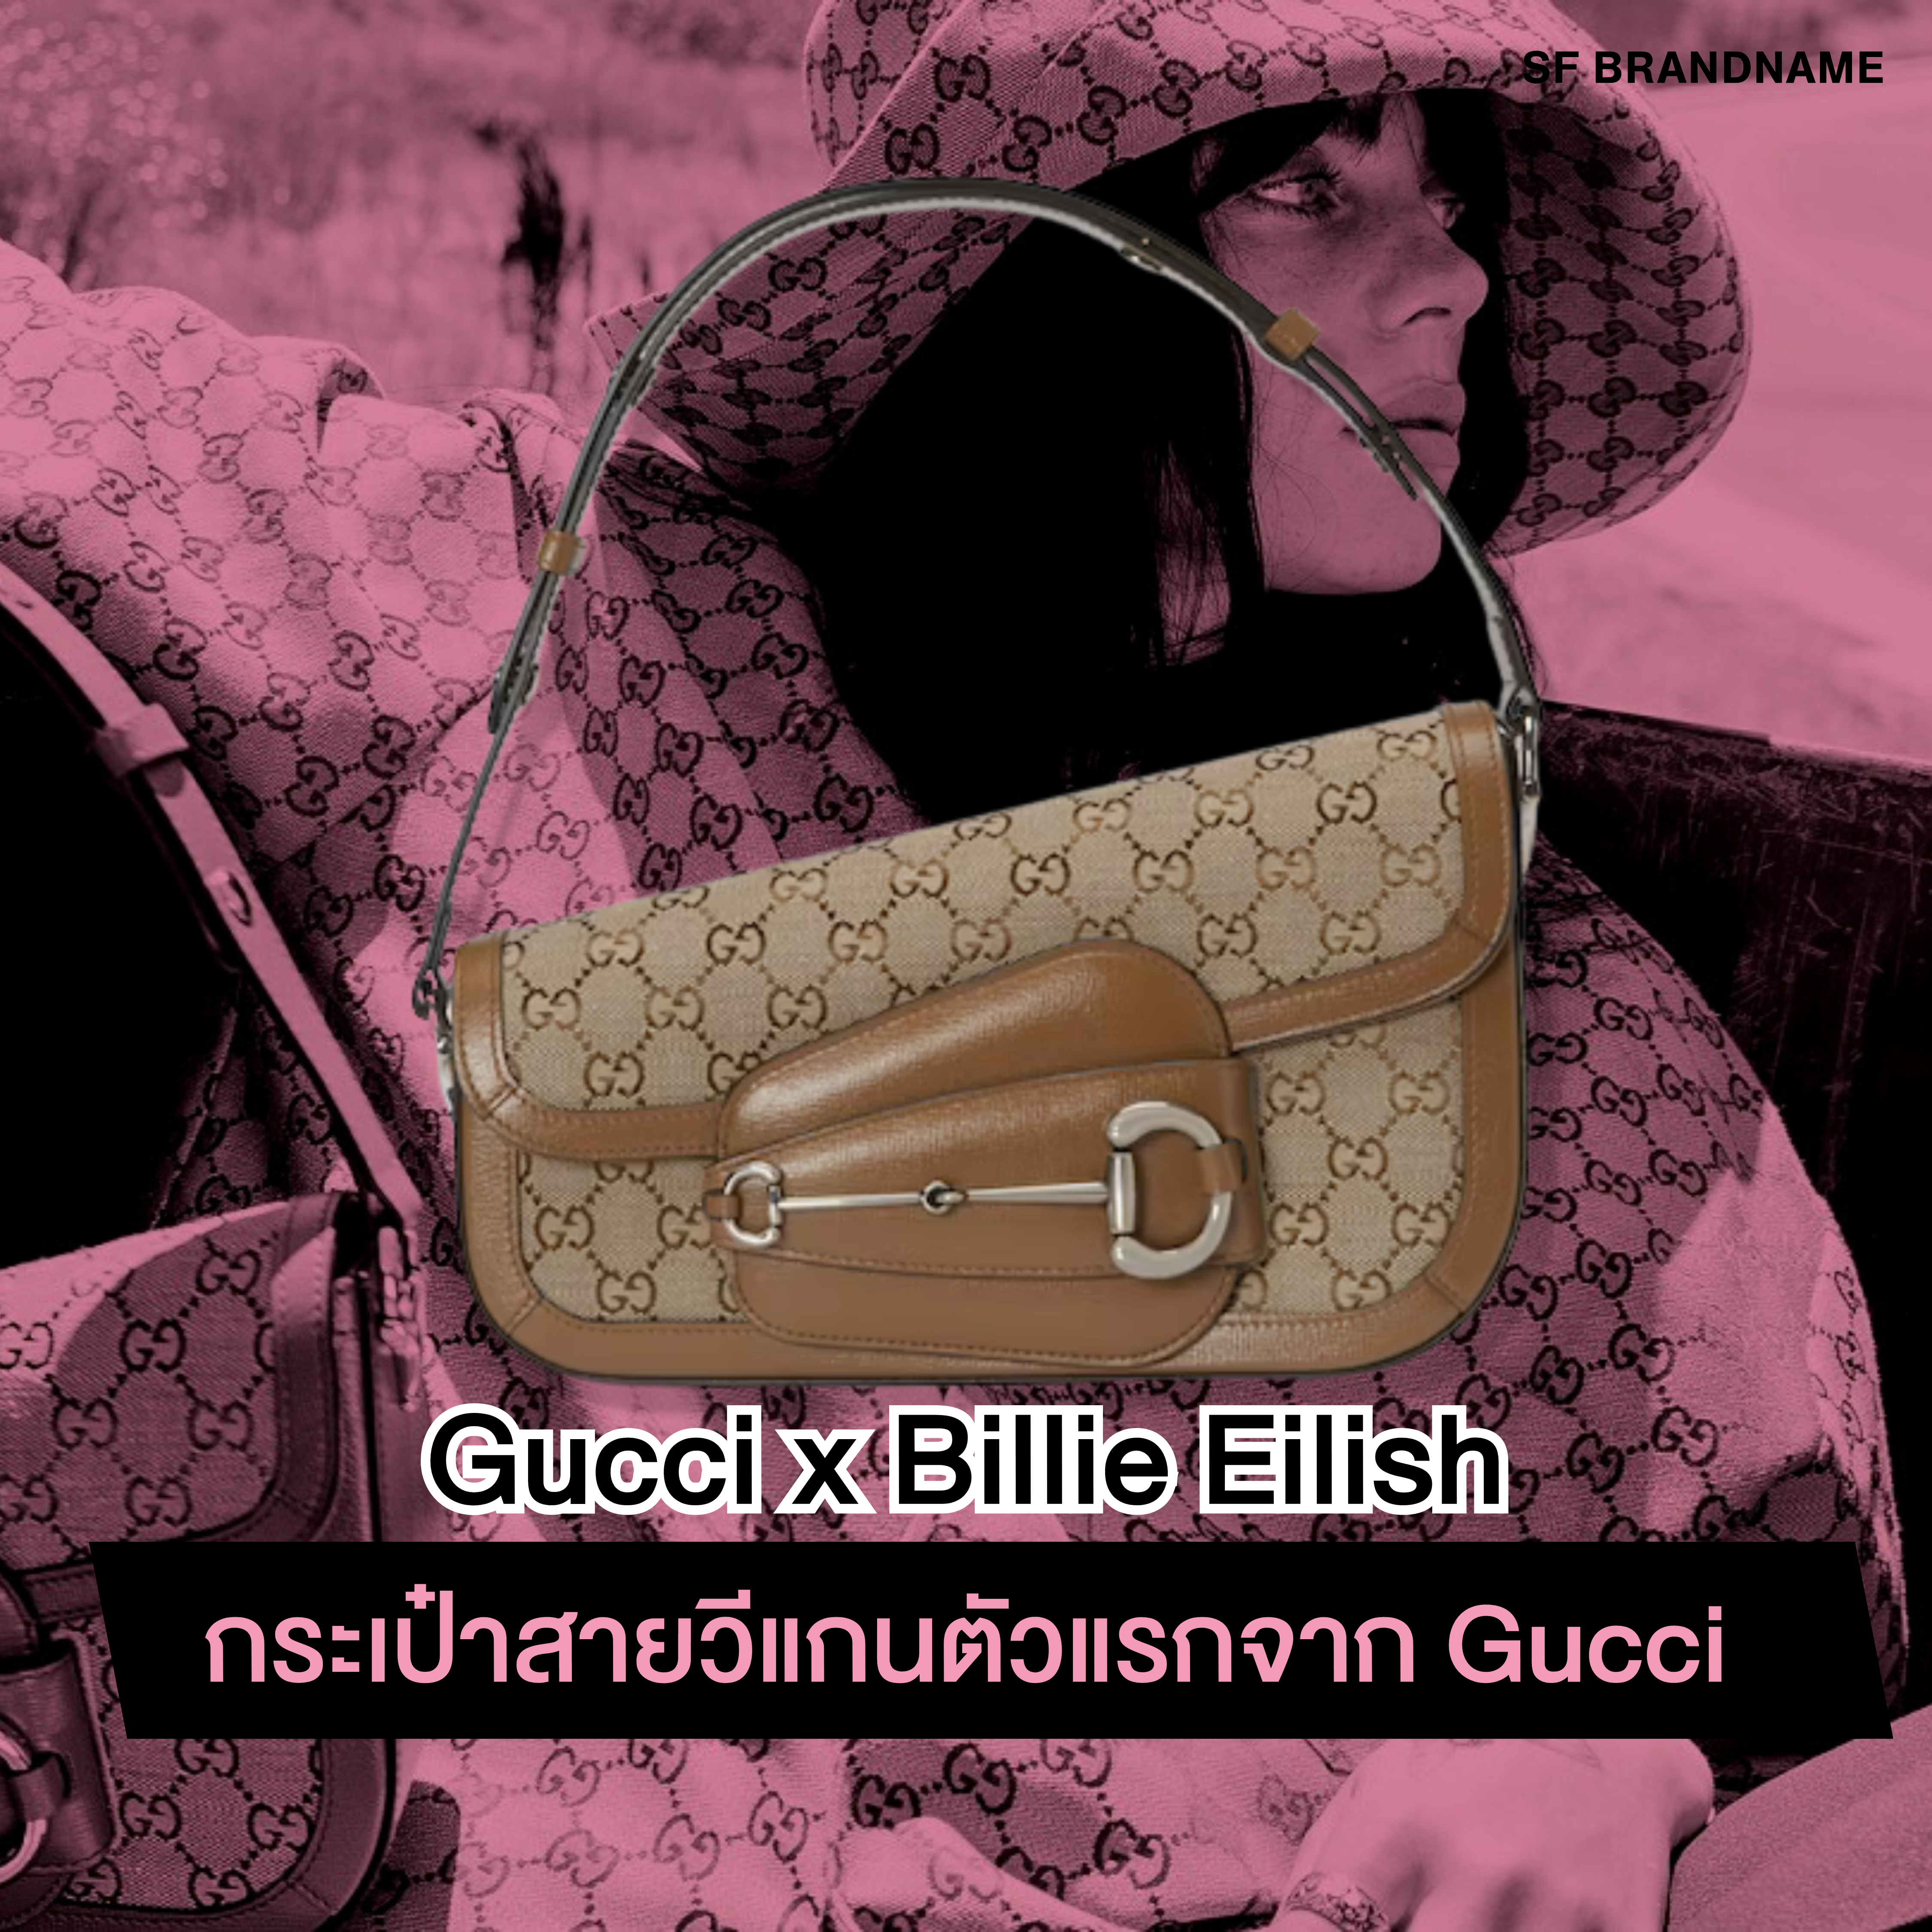 Gucci x Billie Eilish กระเป๋าสายวีแกนตัวแรกจาก Gucci